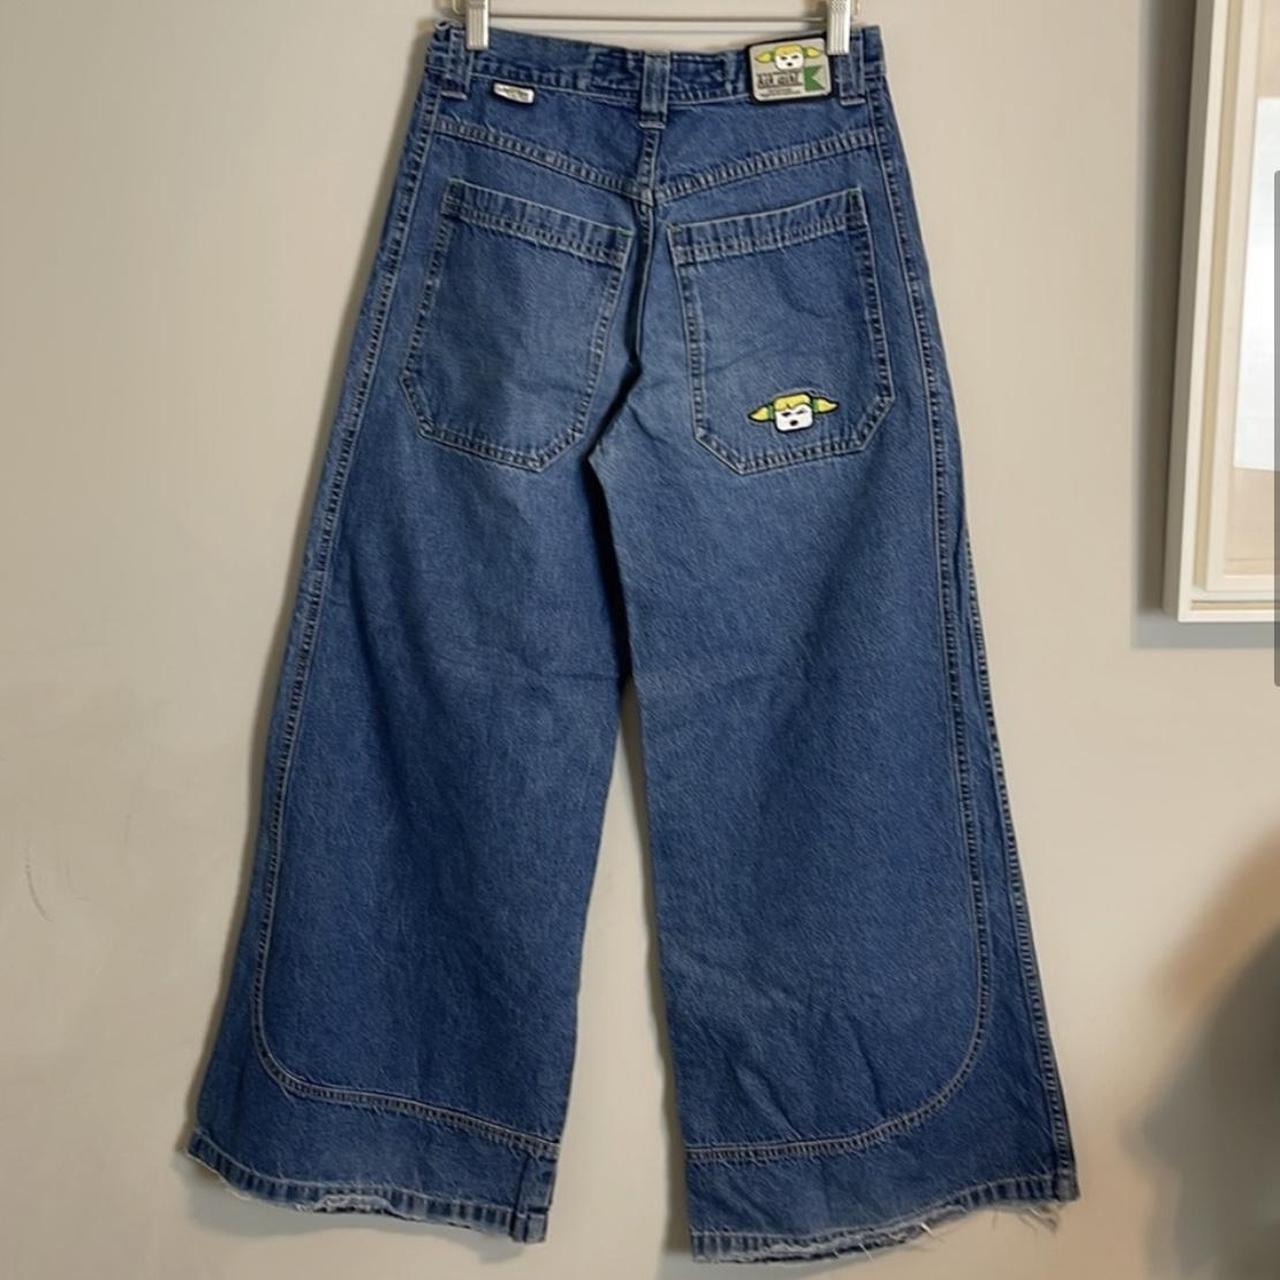 90’s KIKGIRL pants! PRICE IS FIRM - Vintage Kikgirl... - Depop